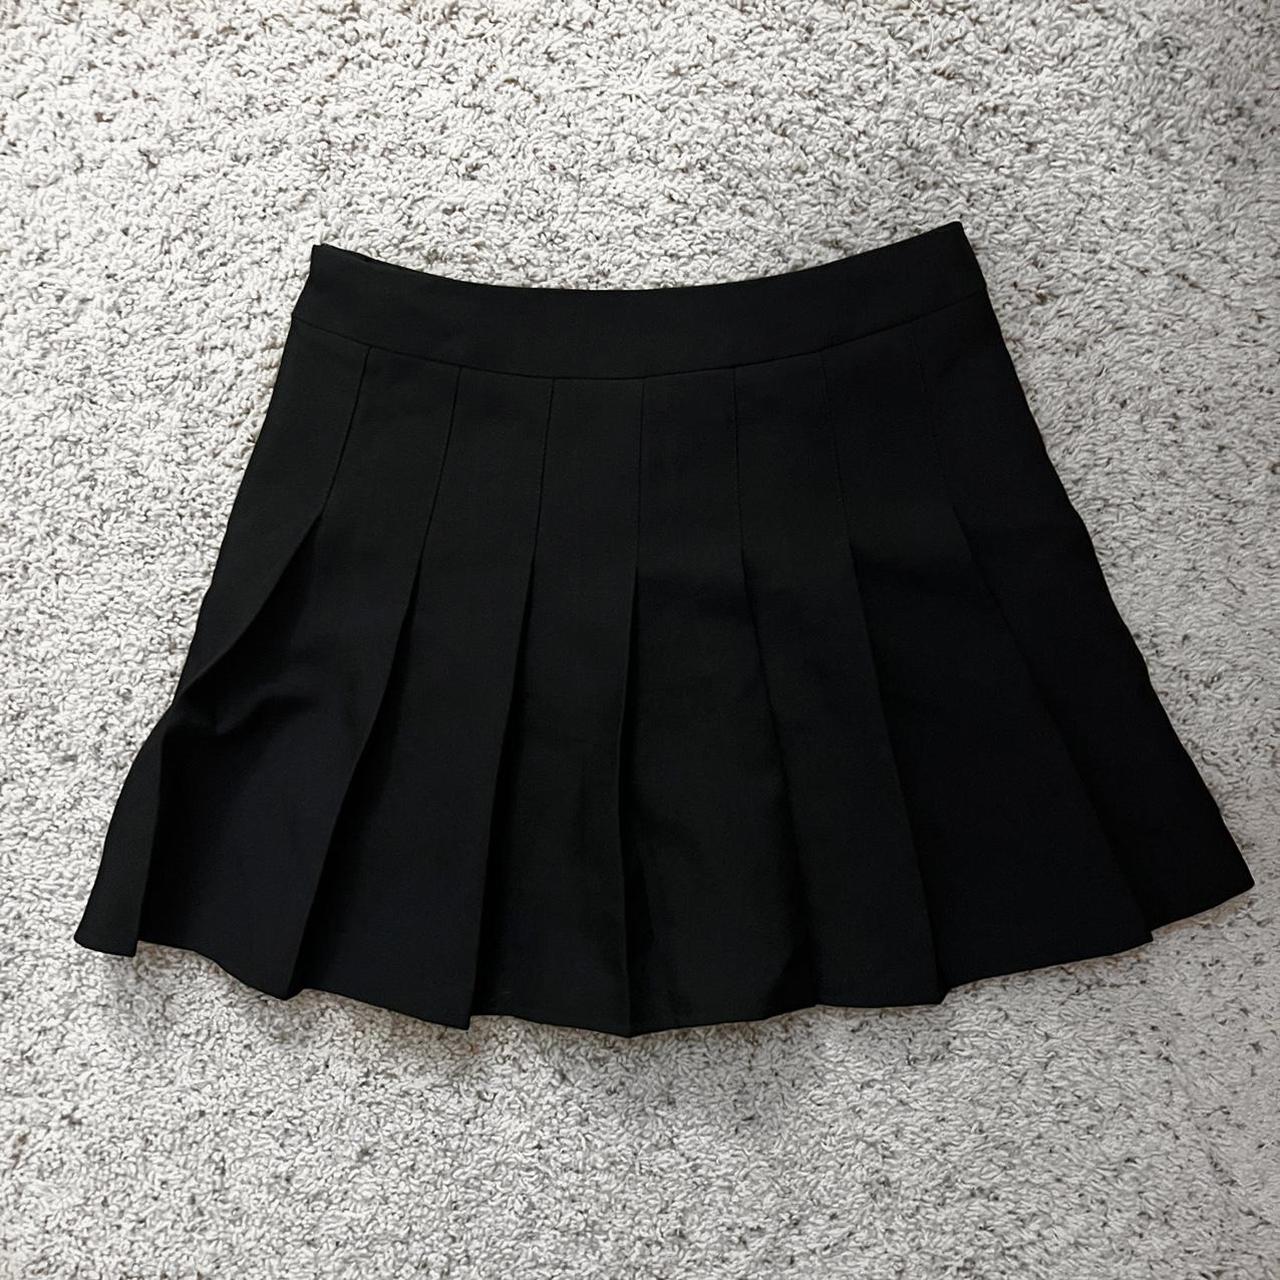 PacSun Women's Black Skirt